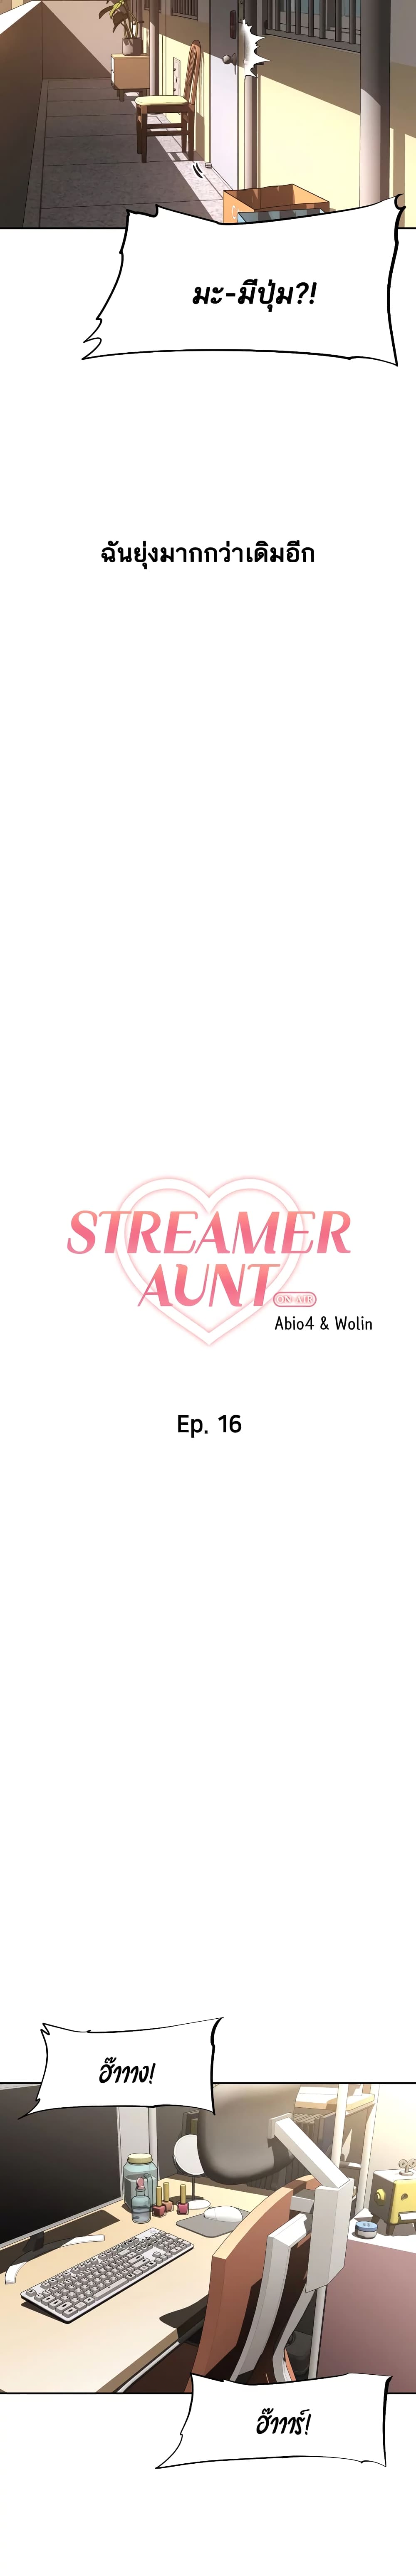 Streamer Aunt 16 05